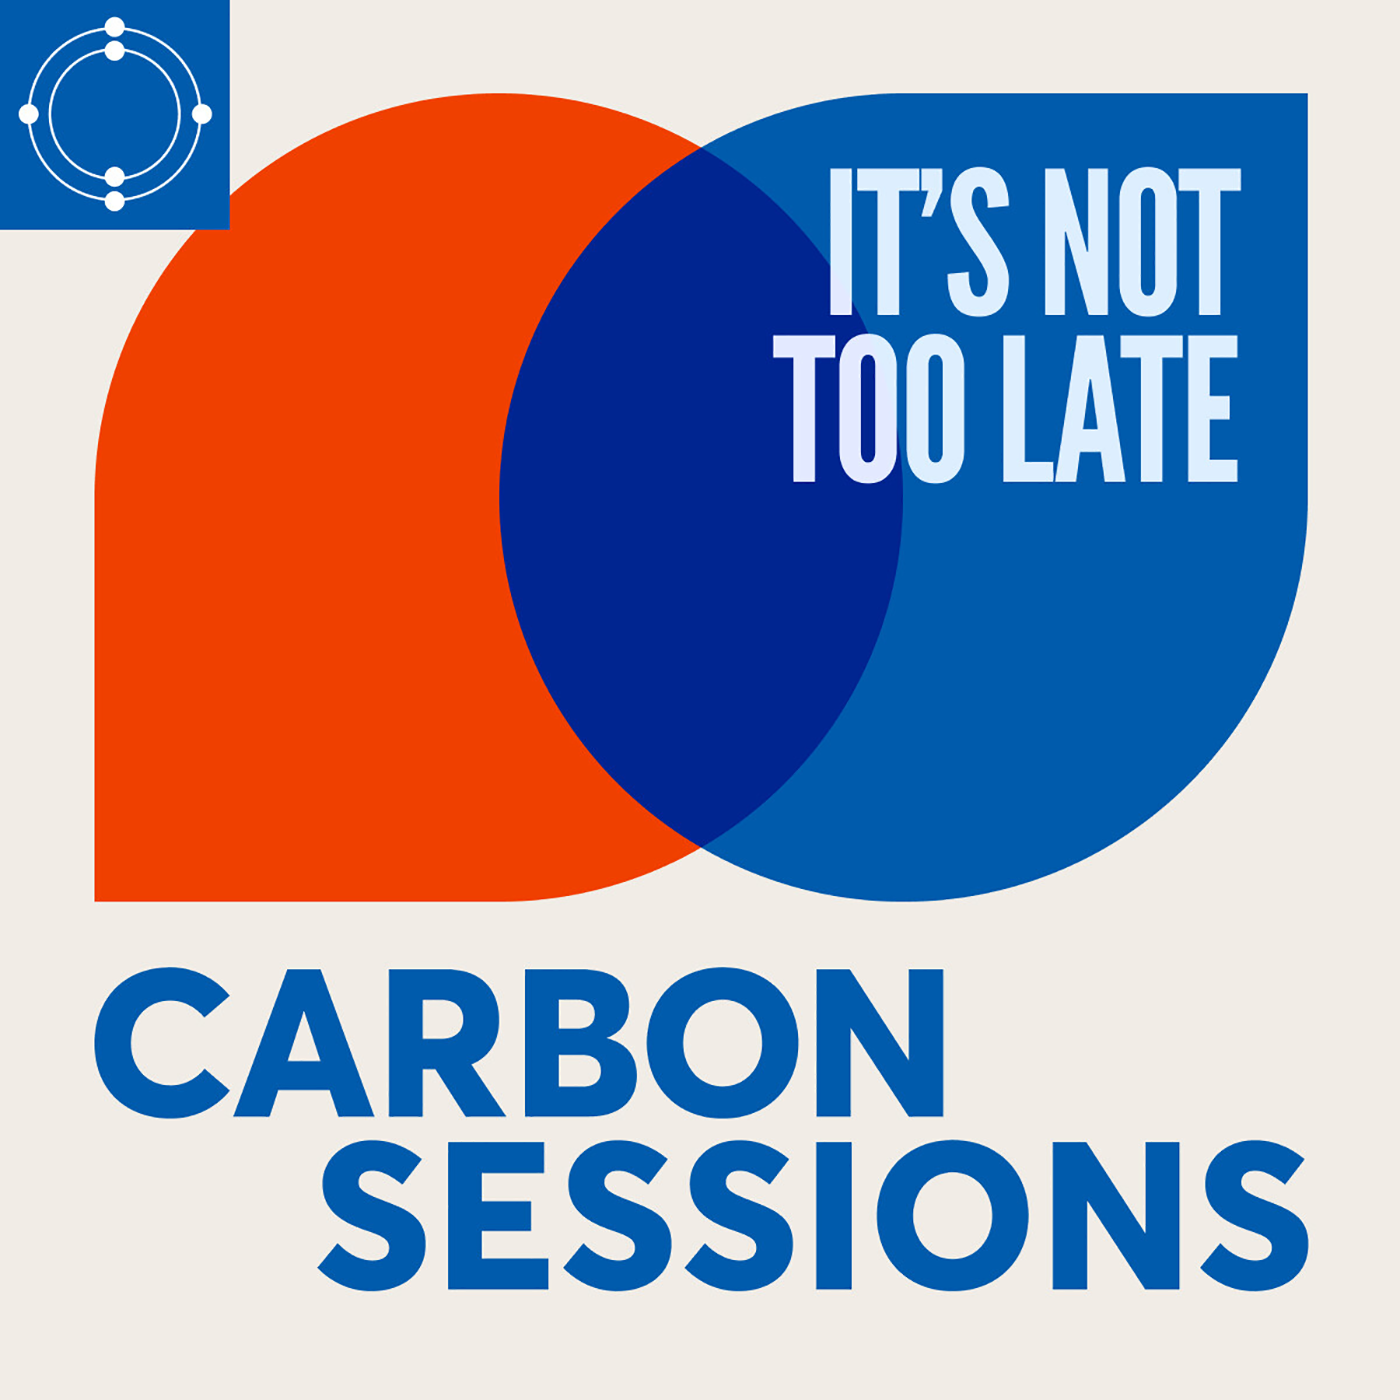 Carbon Sessions logo